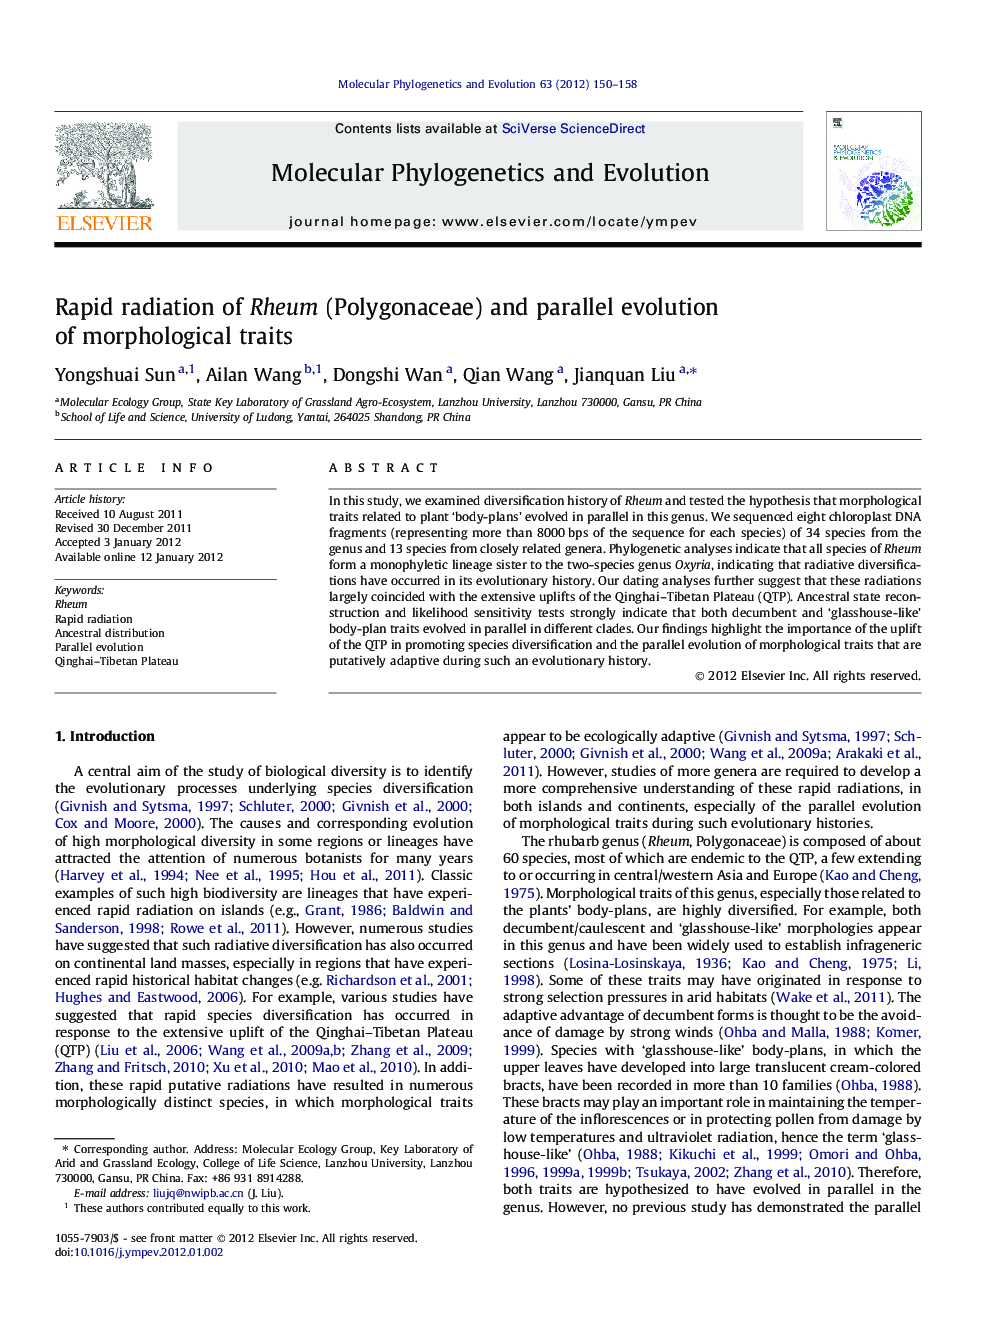 Rapid radiation of Rheum (Polygonaceae) and parallel evolution of morphological traits